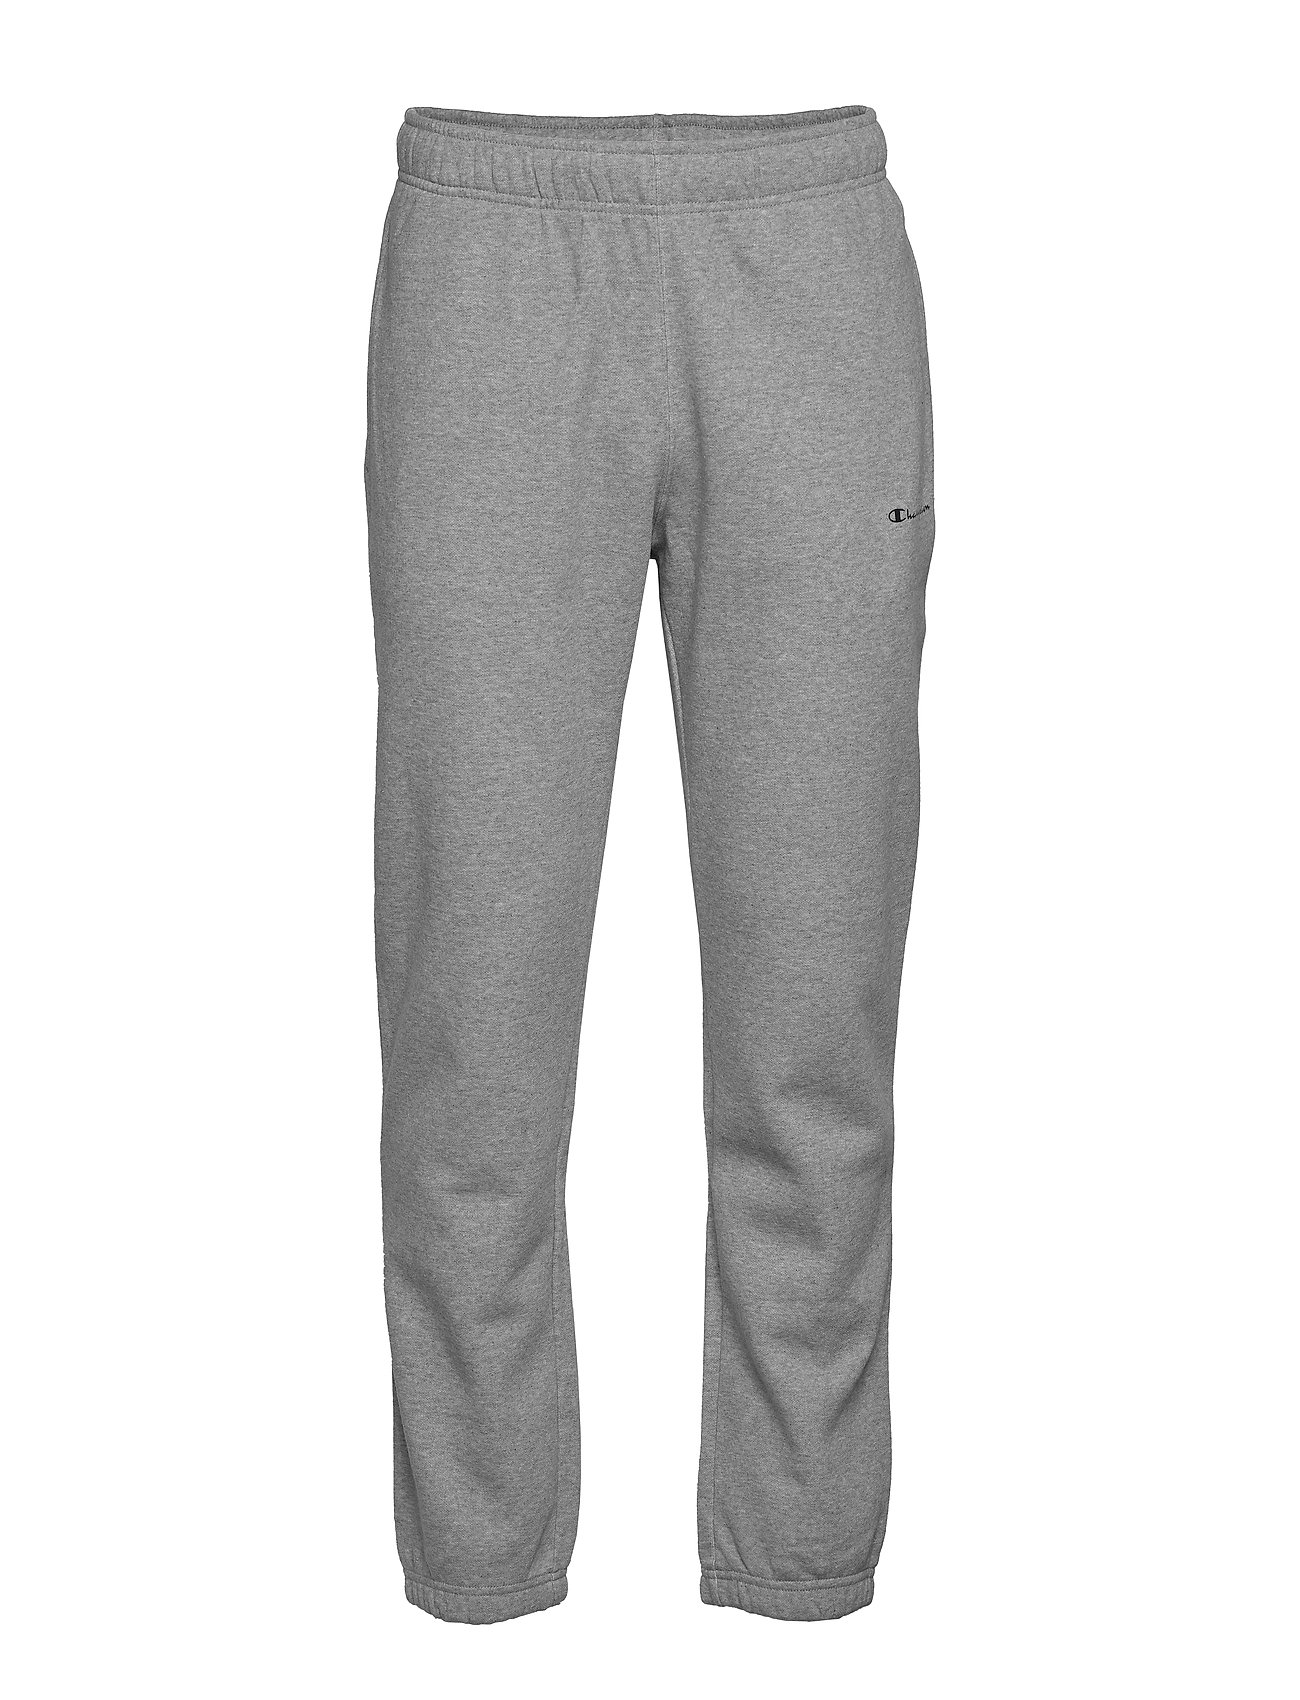 Champion Elastic Cuff Pants (Gray 